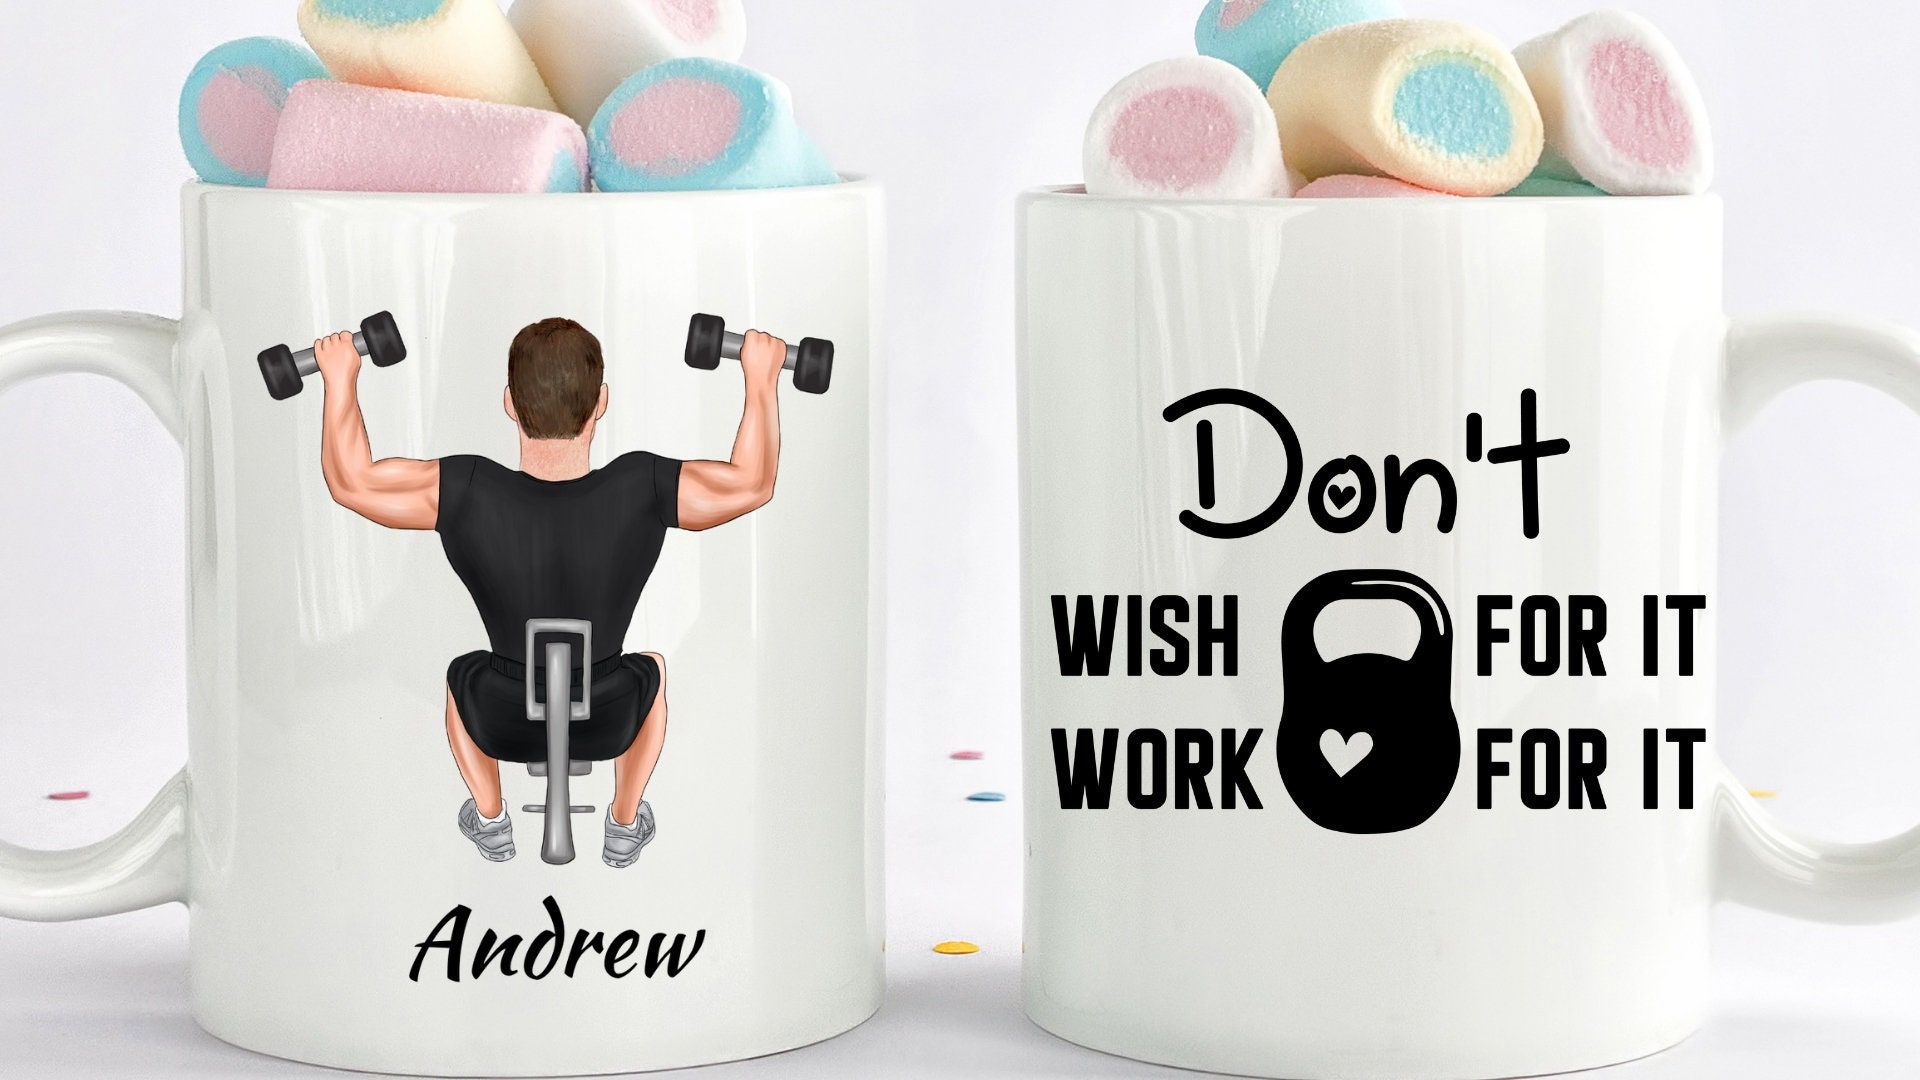 How Can People Lift Weights? Teen Humor Coffee & Tea Gift Mug, Room Dcor, Cool